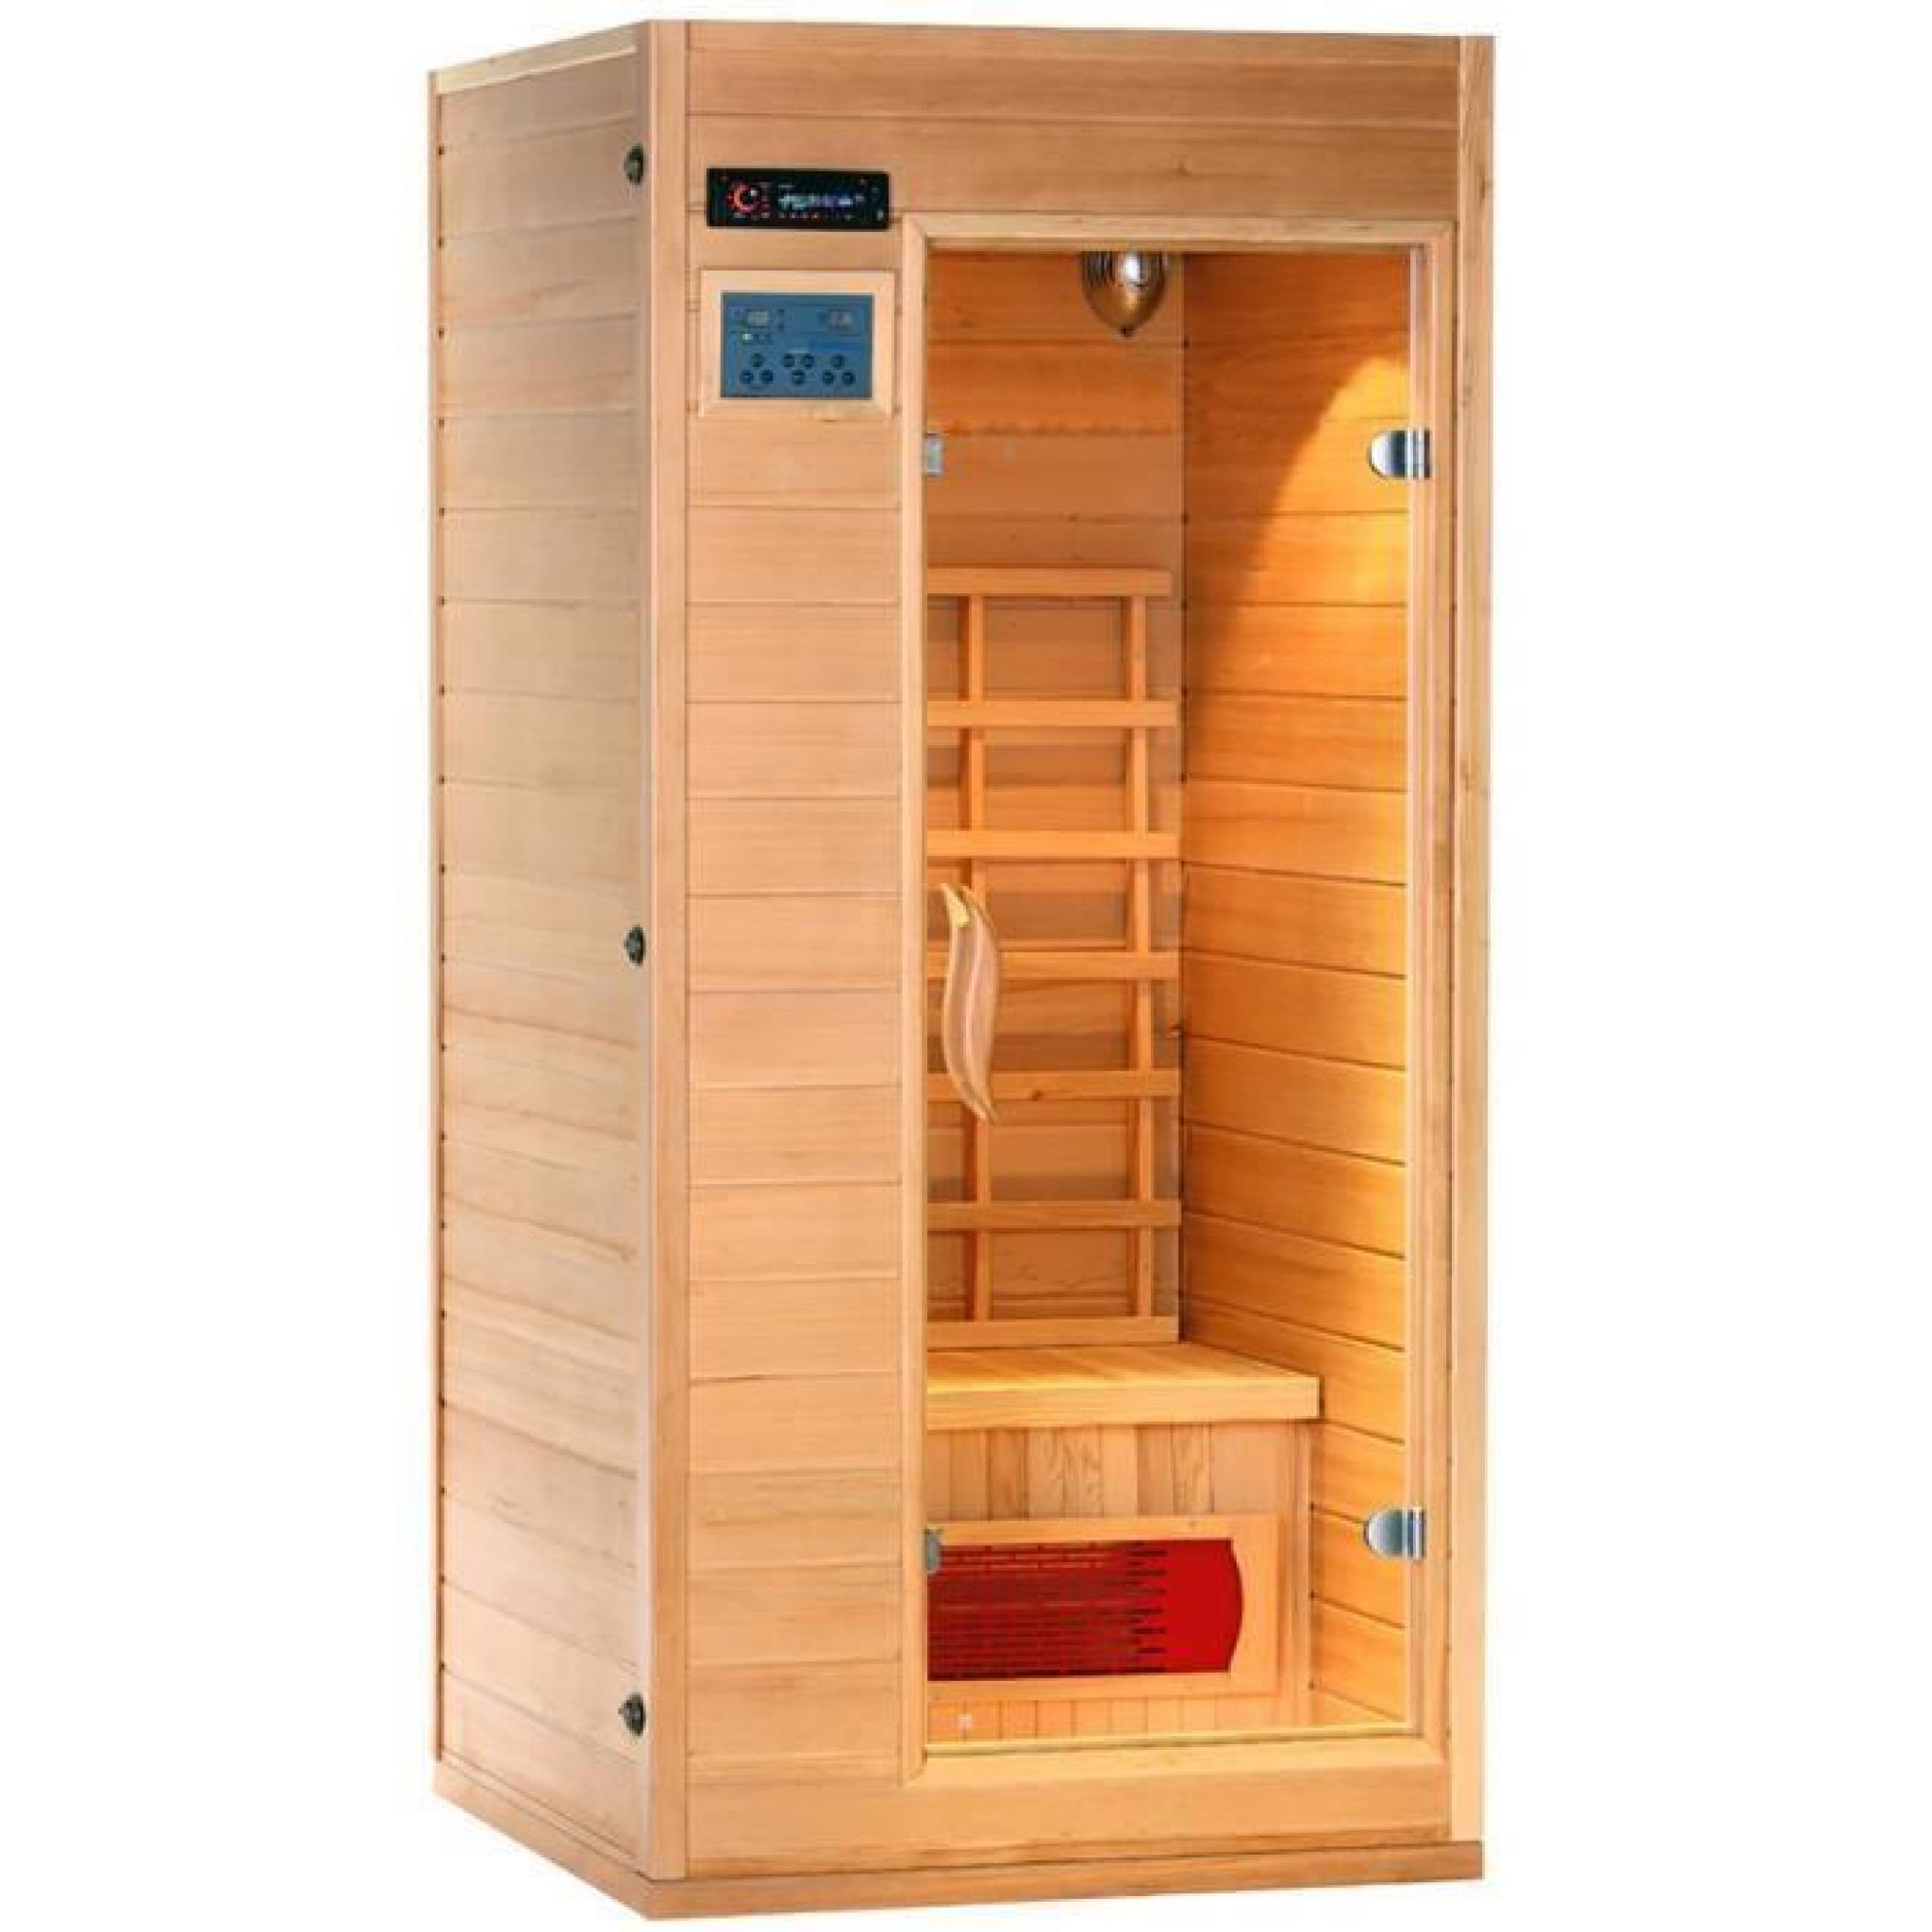 Cabine sauna infrarouge 1 place 90x90x190cm